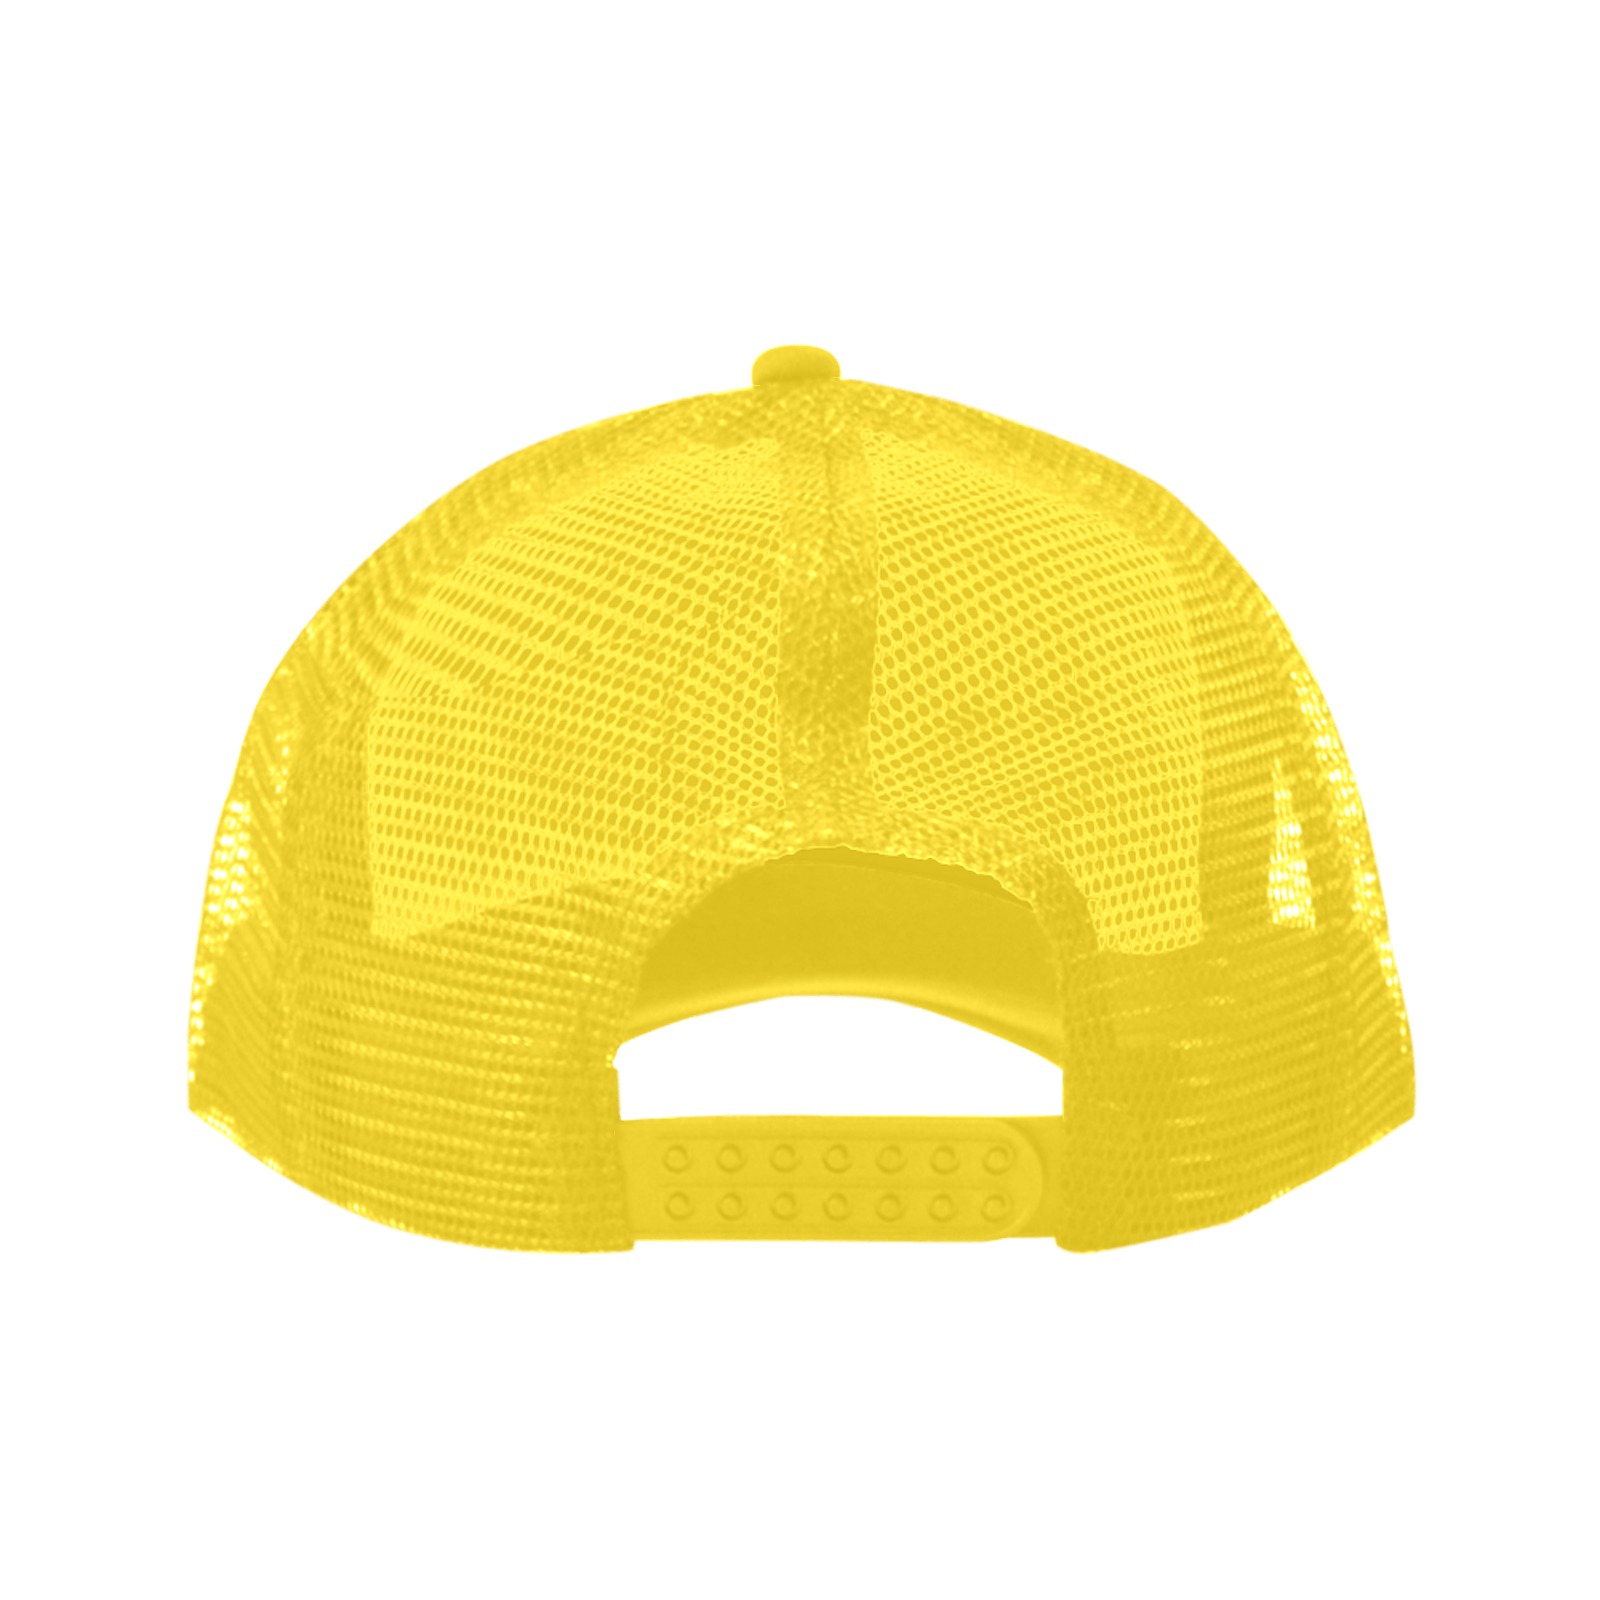 Lil Gods Yellow Trucker Hat